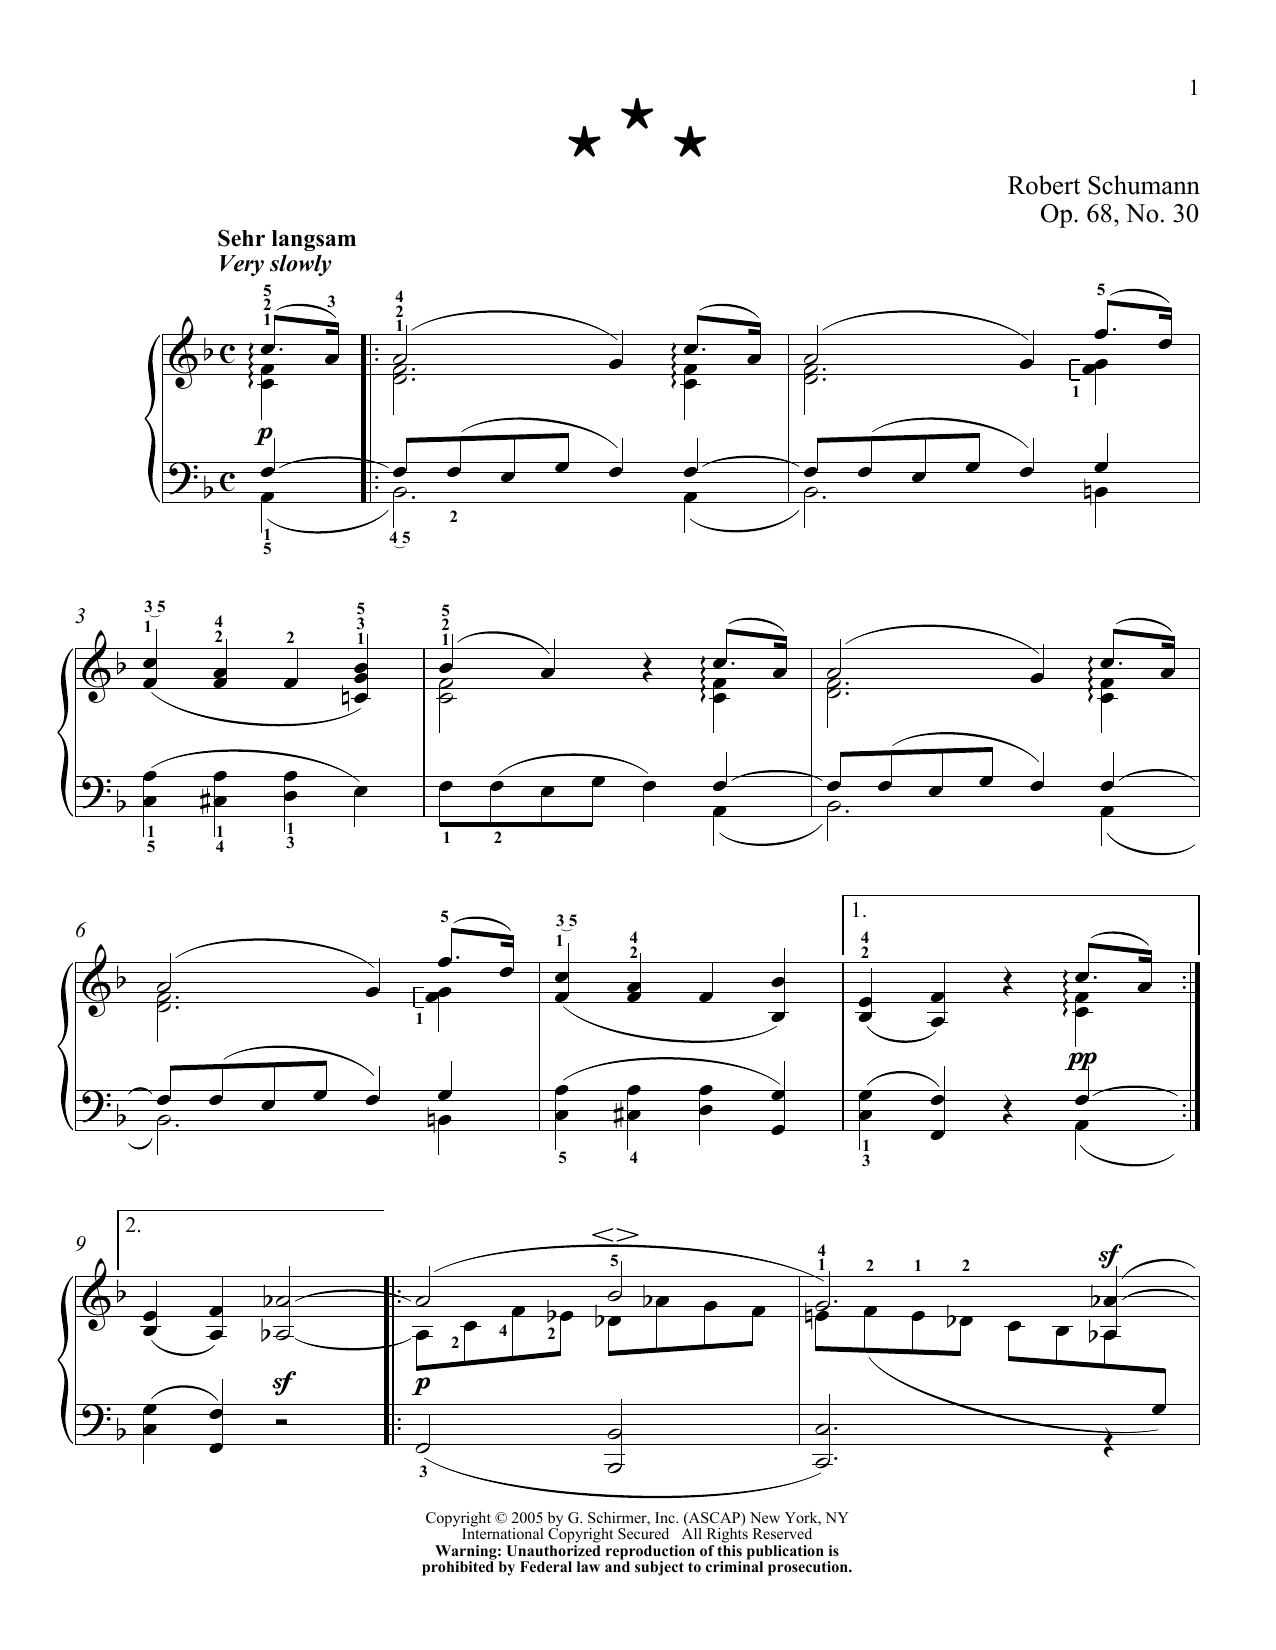 Robert Schumann Molto Lento, Op. 68, No. 30 sheet music notes and chords arranged for Piano Solo